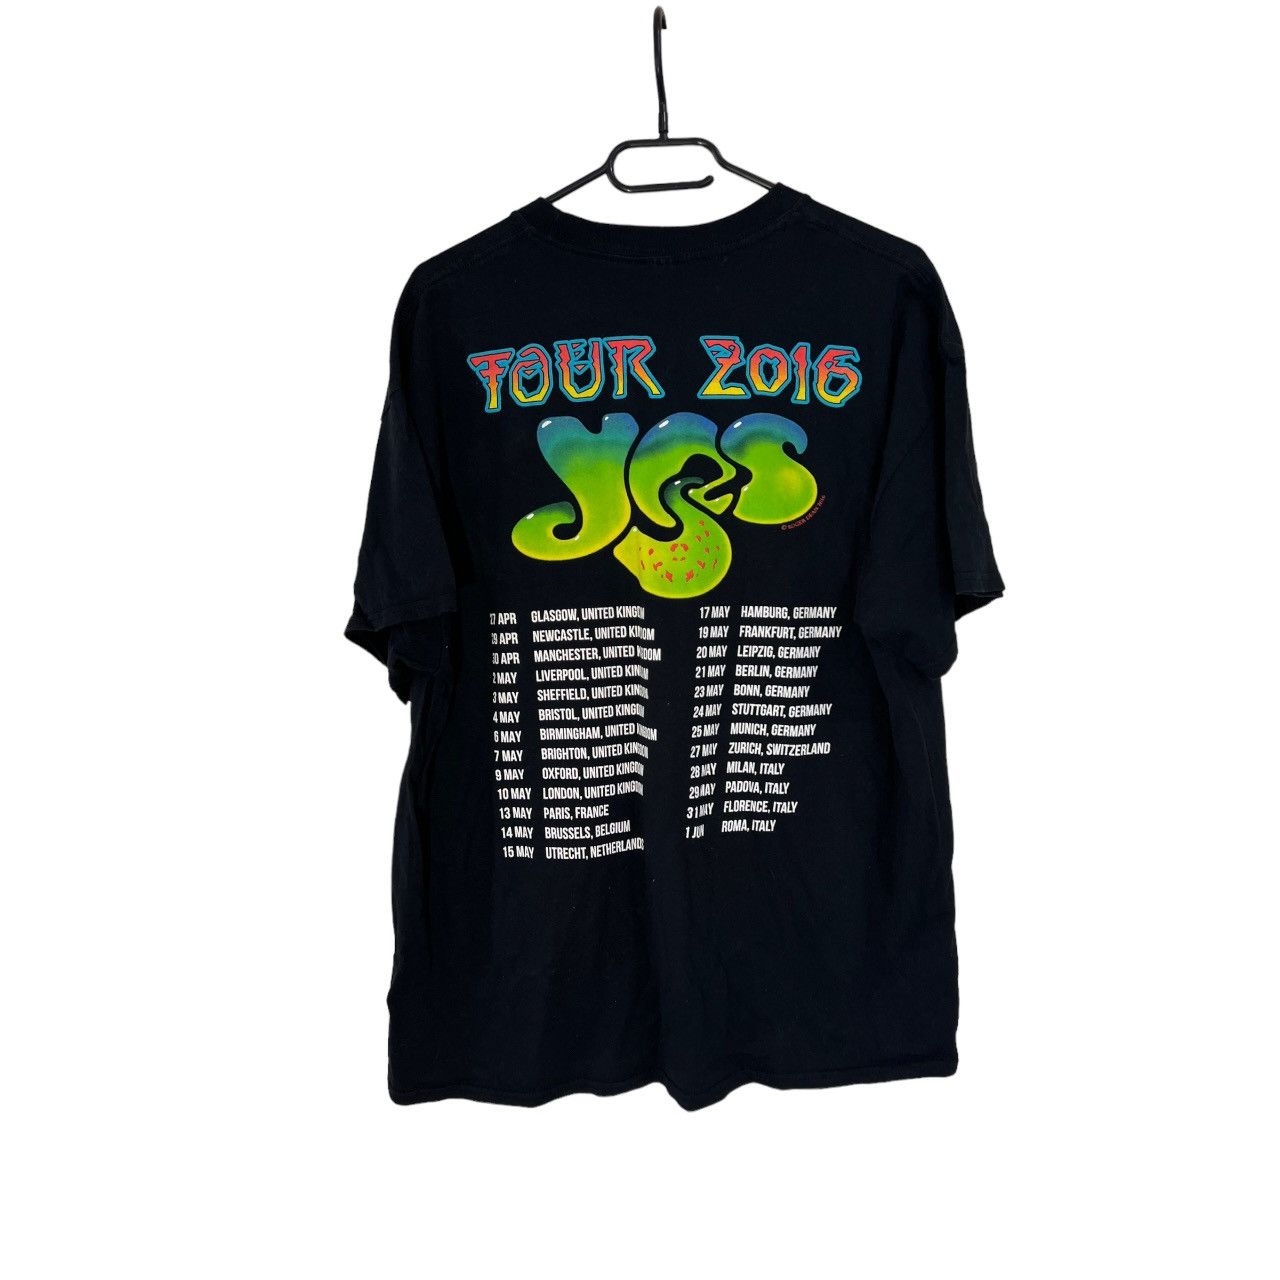 Vintage Roger dean tour 2016 t-shirt retro tee 90s black Size US M / EU 48-50 / 2 - 4 Thumbnail